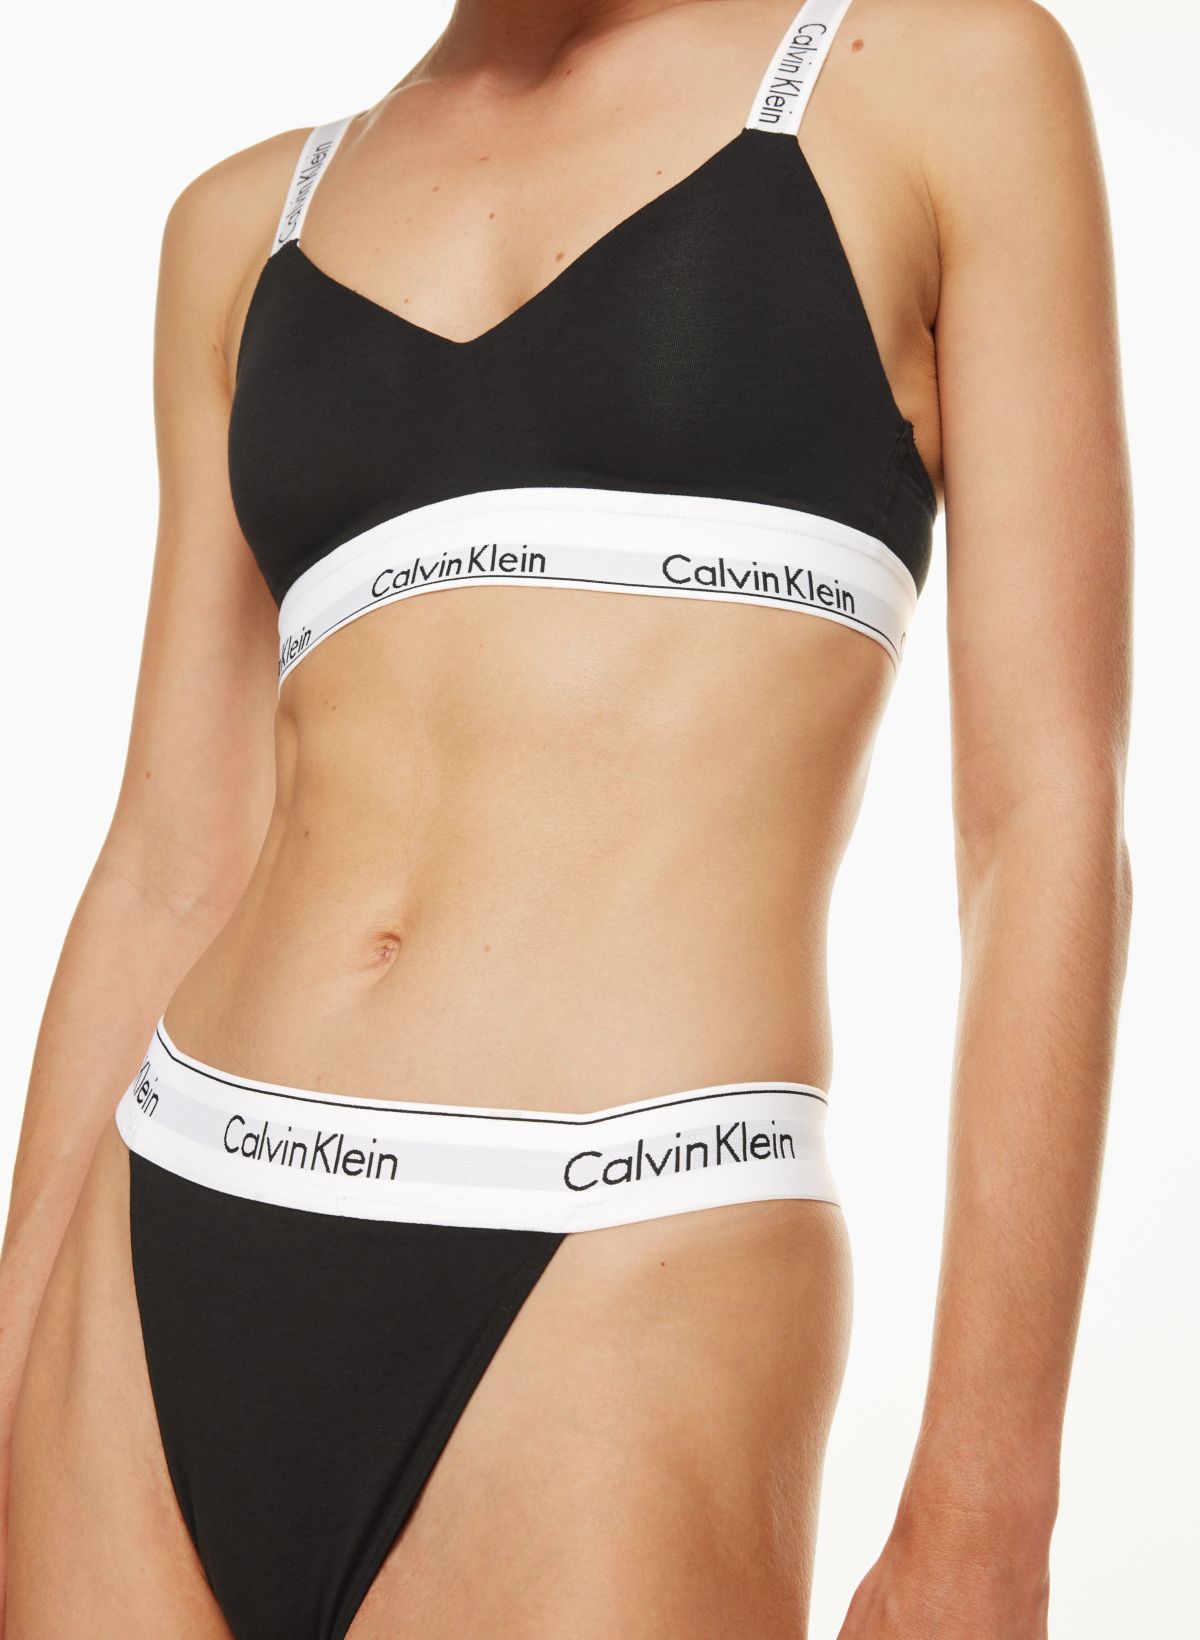 Calvin Klein Modern Cotton Thong - White